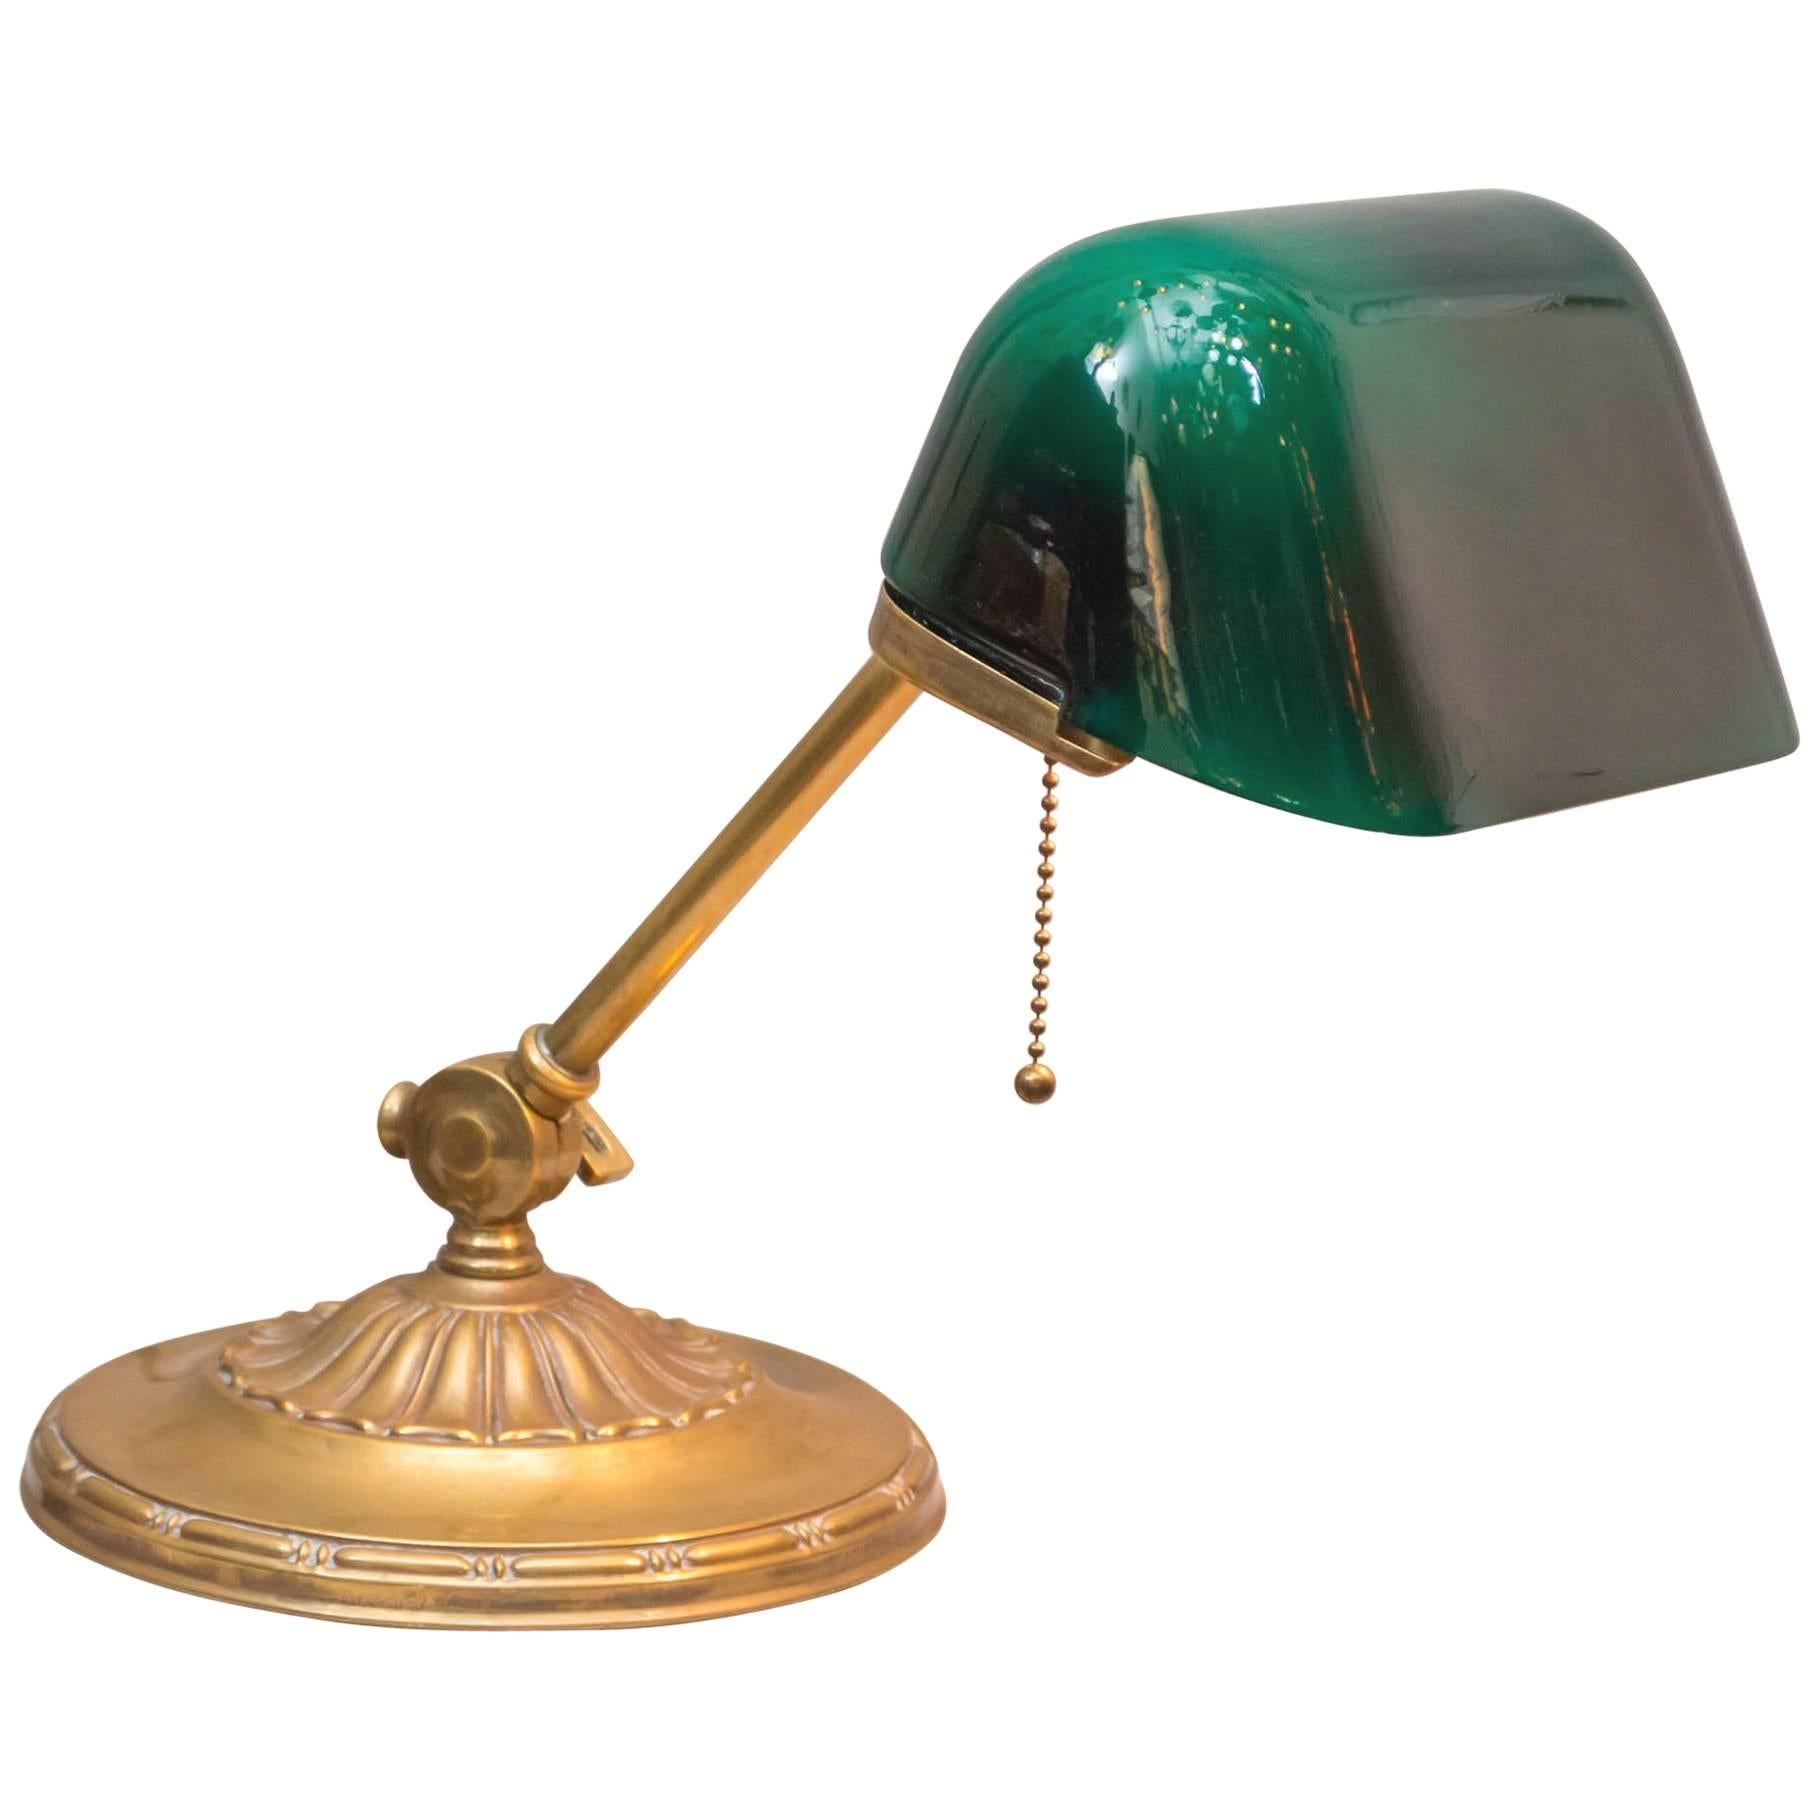 Signed "Emeralite" Banker's Desk Lamp